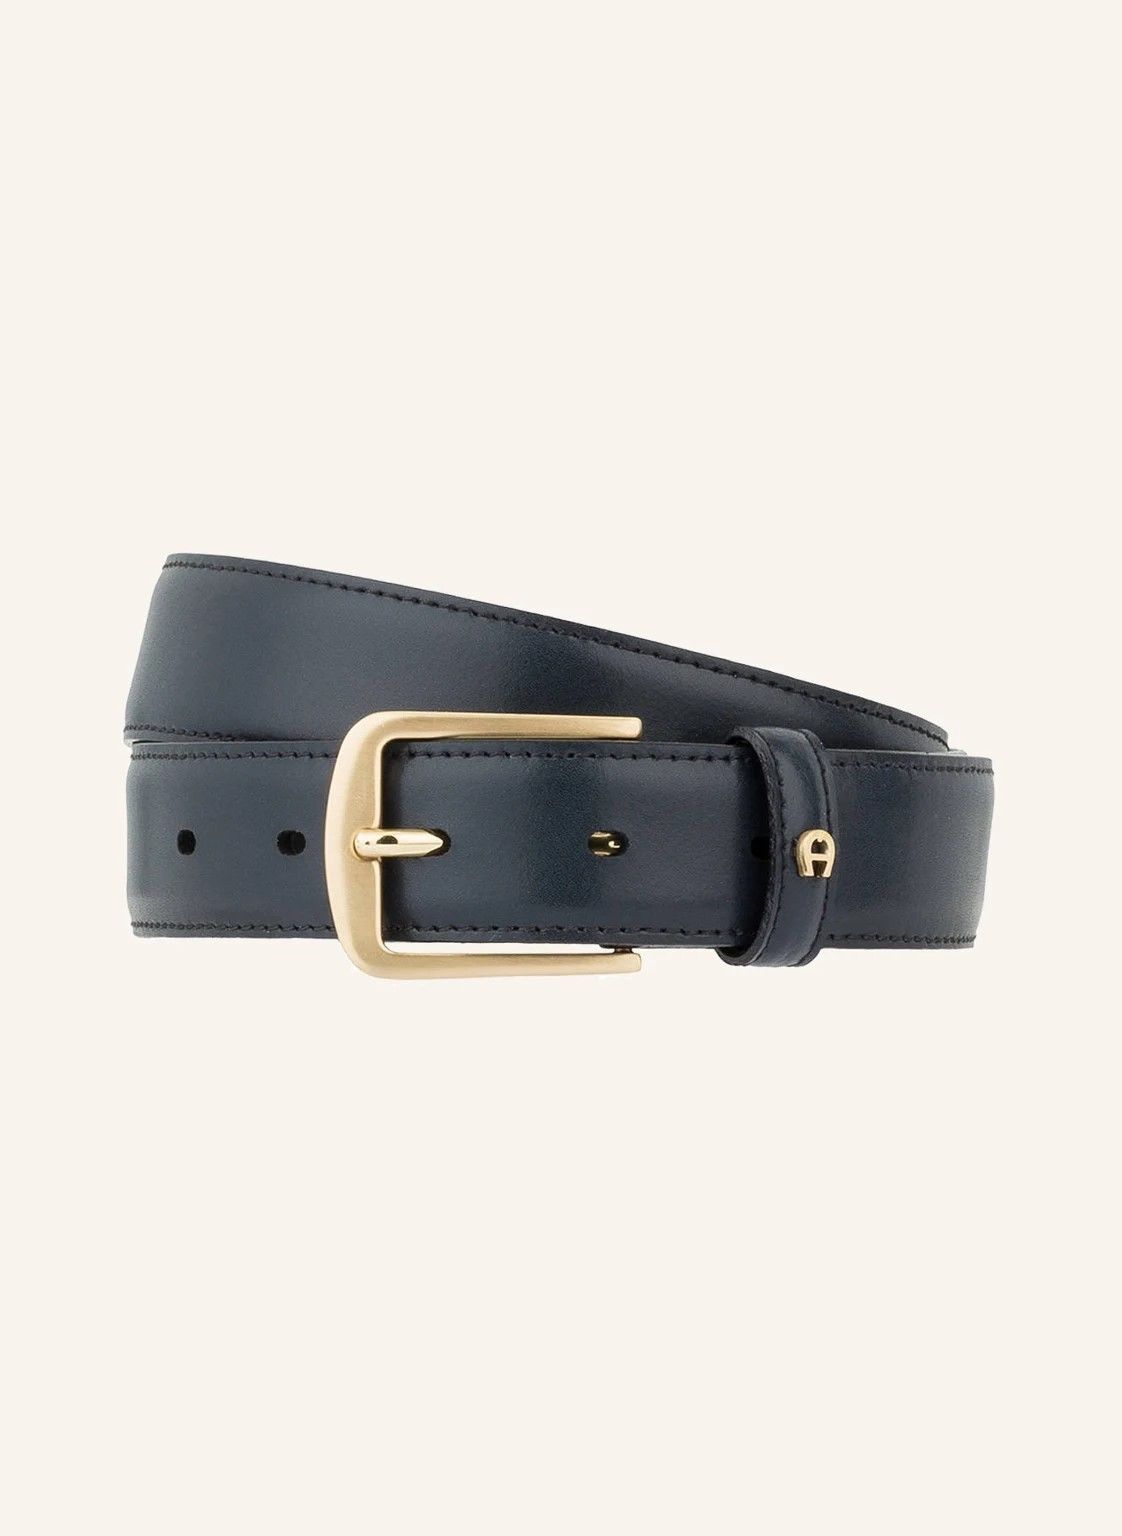 Babaton Rectangle Leather Belt in Black/Gold size Large